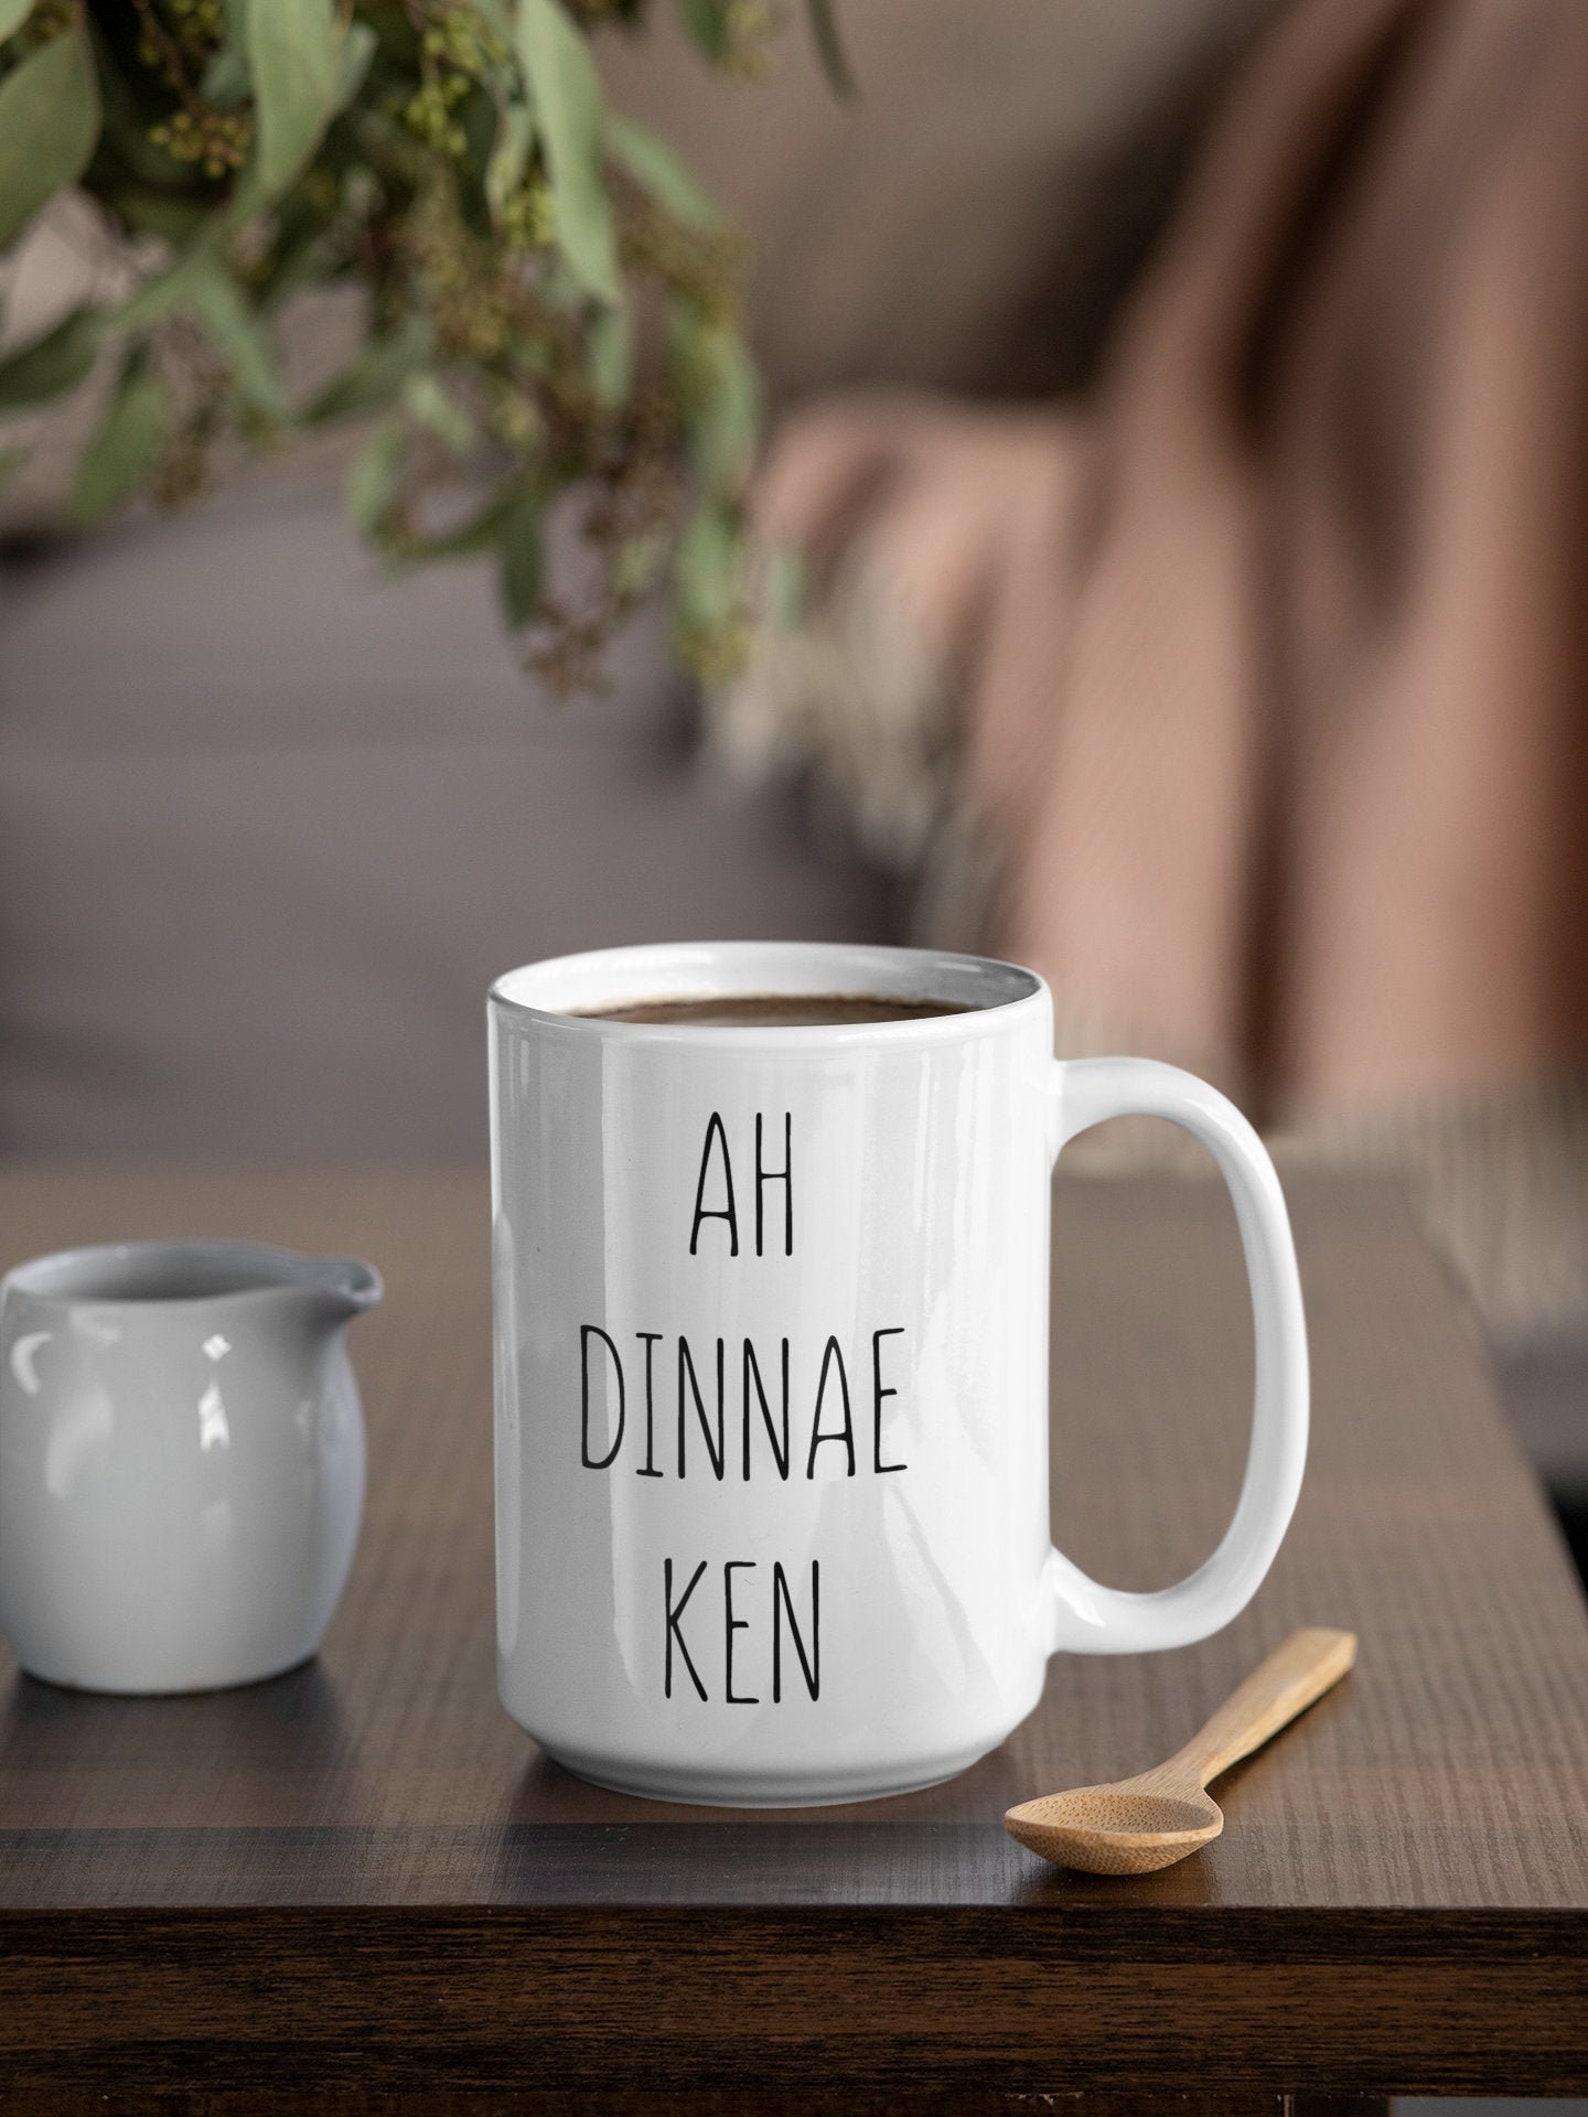 Ah Dinnae Ken Scotland sayings mug gift Coffee Lover Gift | Etsy